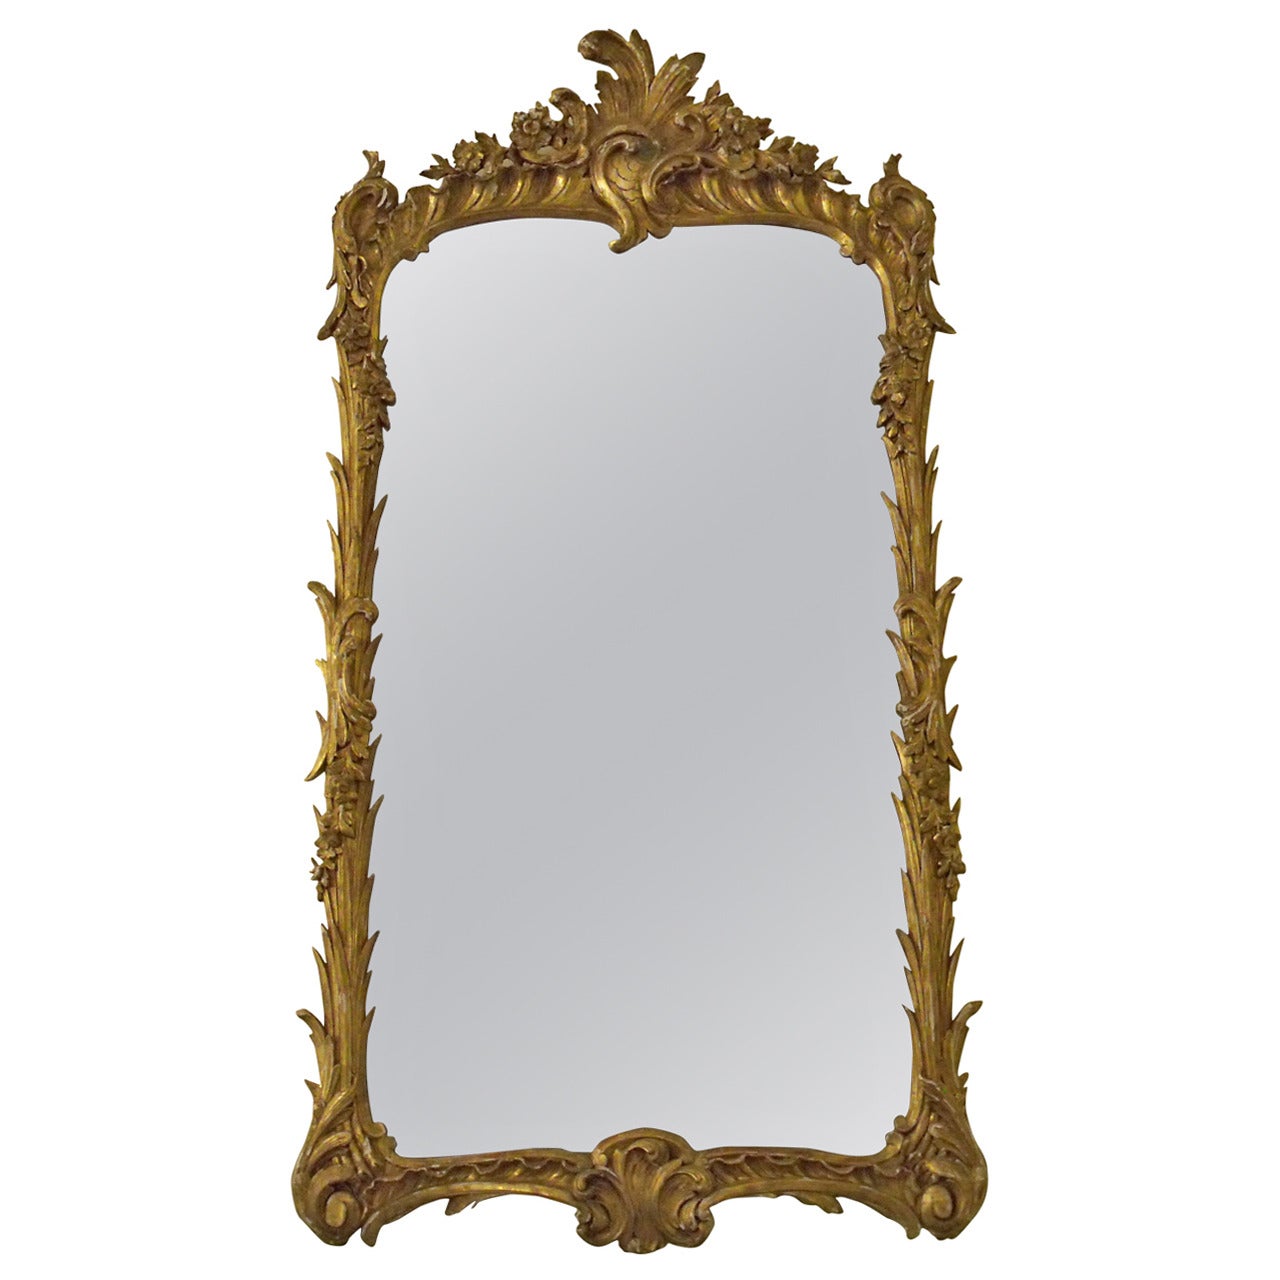 Early 20th c. Maison Jansen Rococo Style Mirror